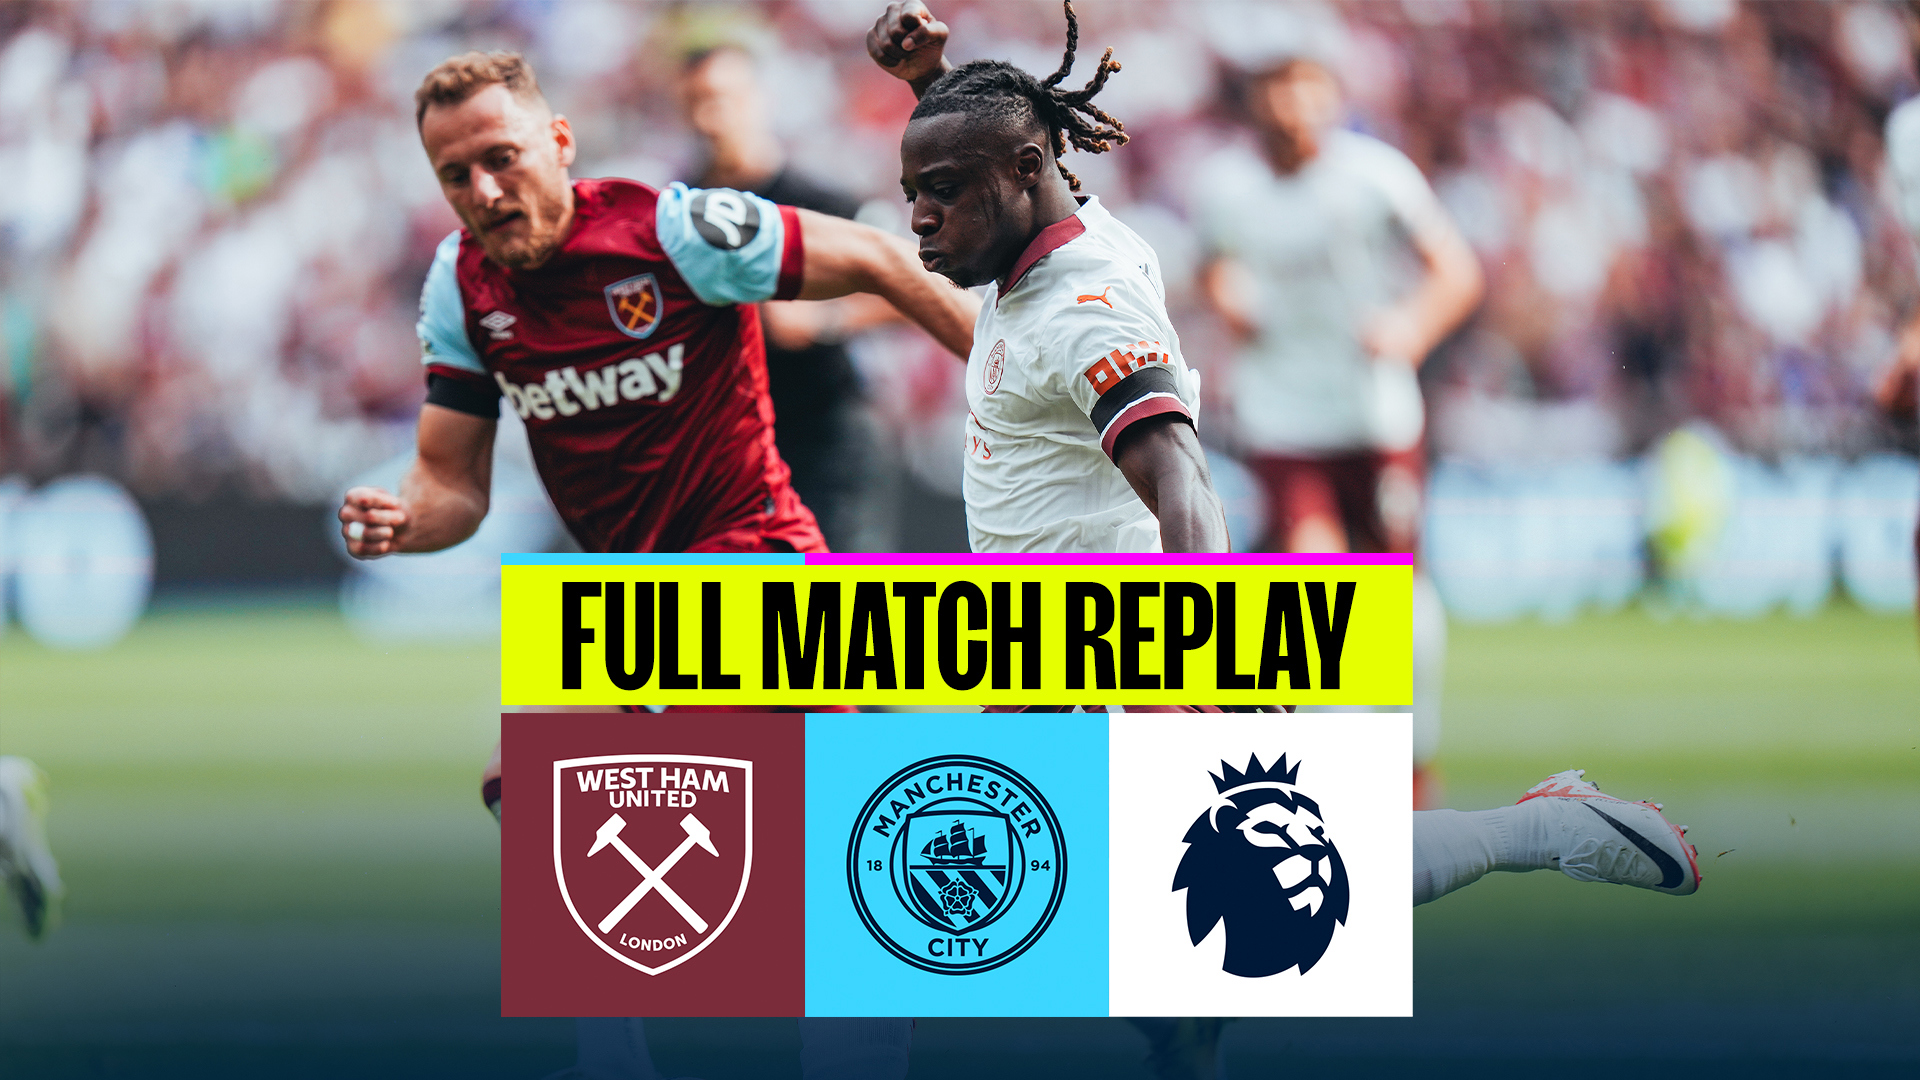 West Ham v City Full-match replay